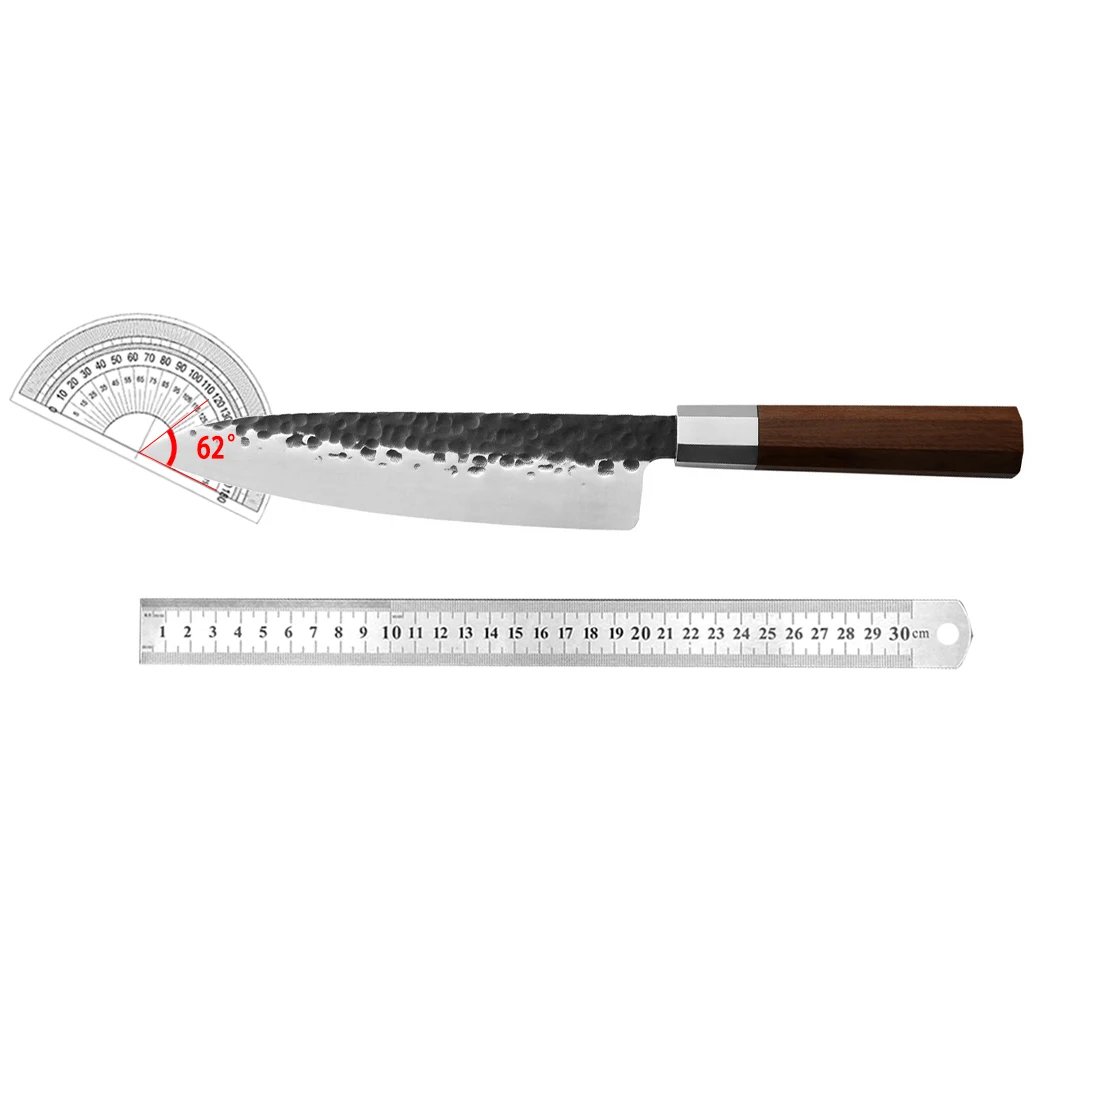 https://ae01.alicdn.com/kf/S4d00033fd3c342c0b4c27f0706f0e45aF/Japanese-cuisine-kitchen-knife-rosewood-octagonal-handle-hammer-knife-set-4-piece-sashimi-knife-meat-cleaver.jpg